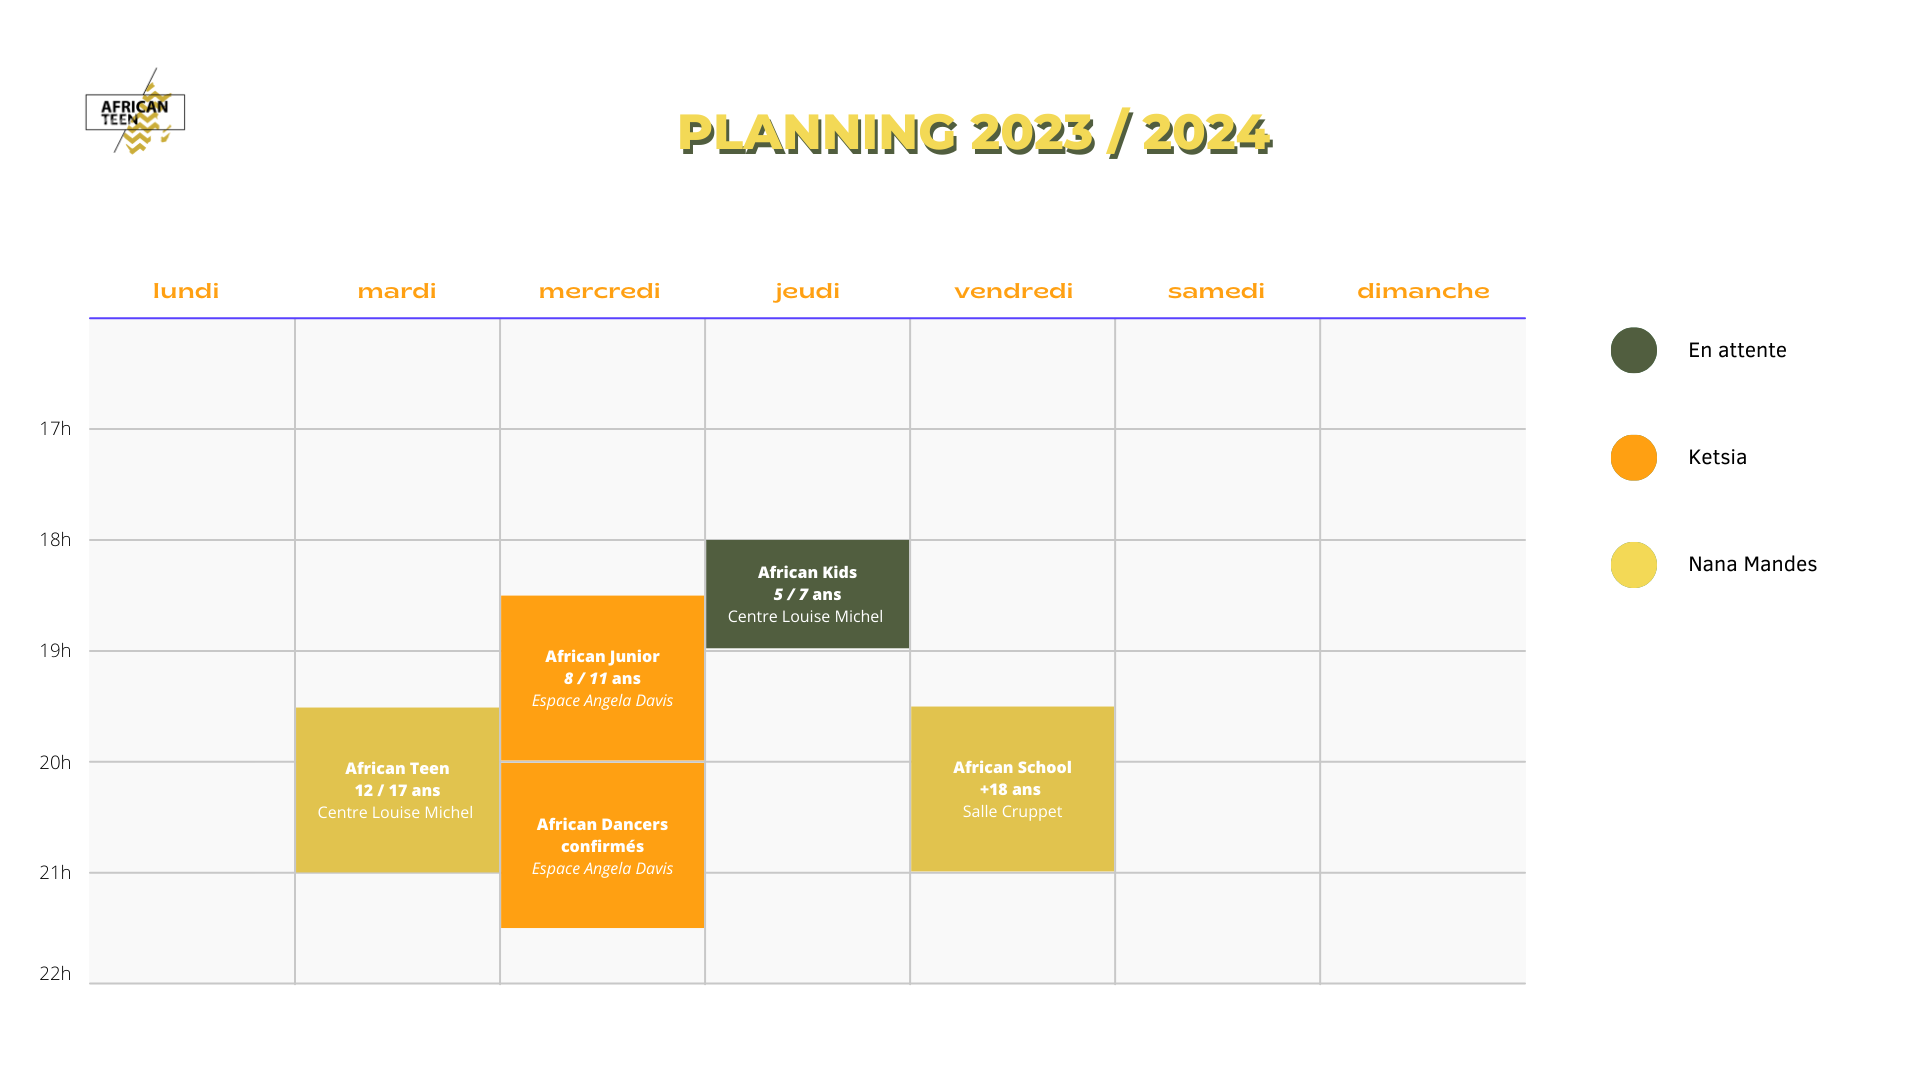 Planning annuel African Teen 2023:2024